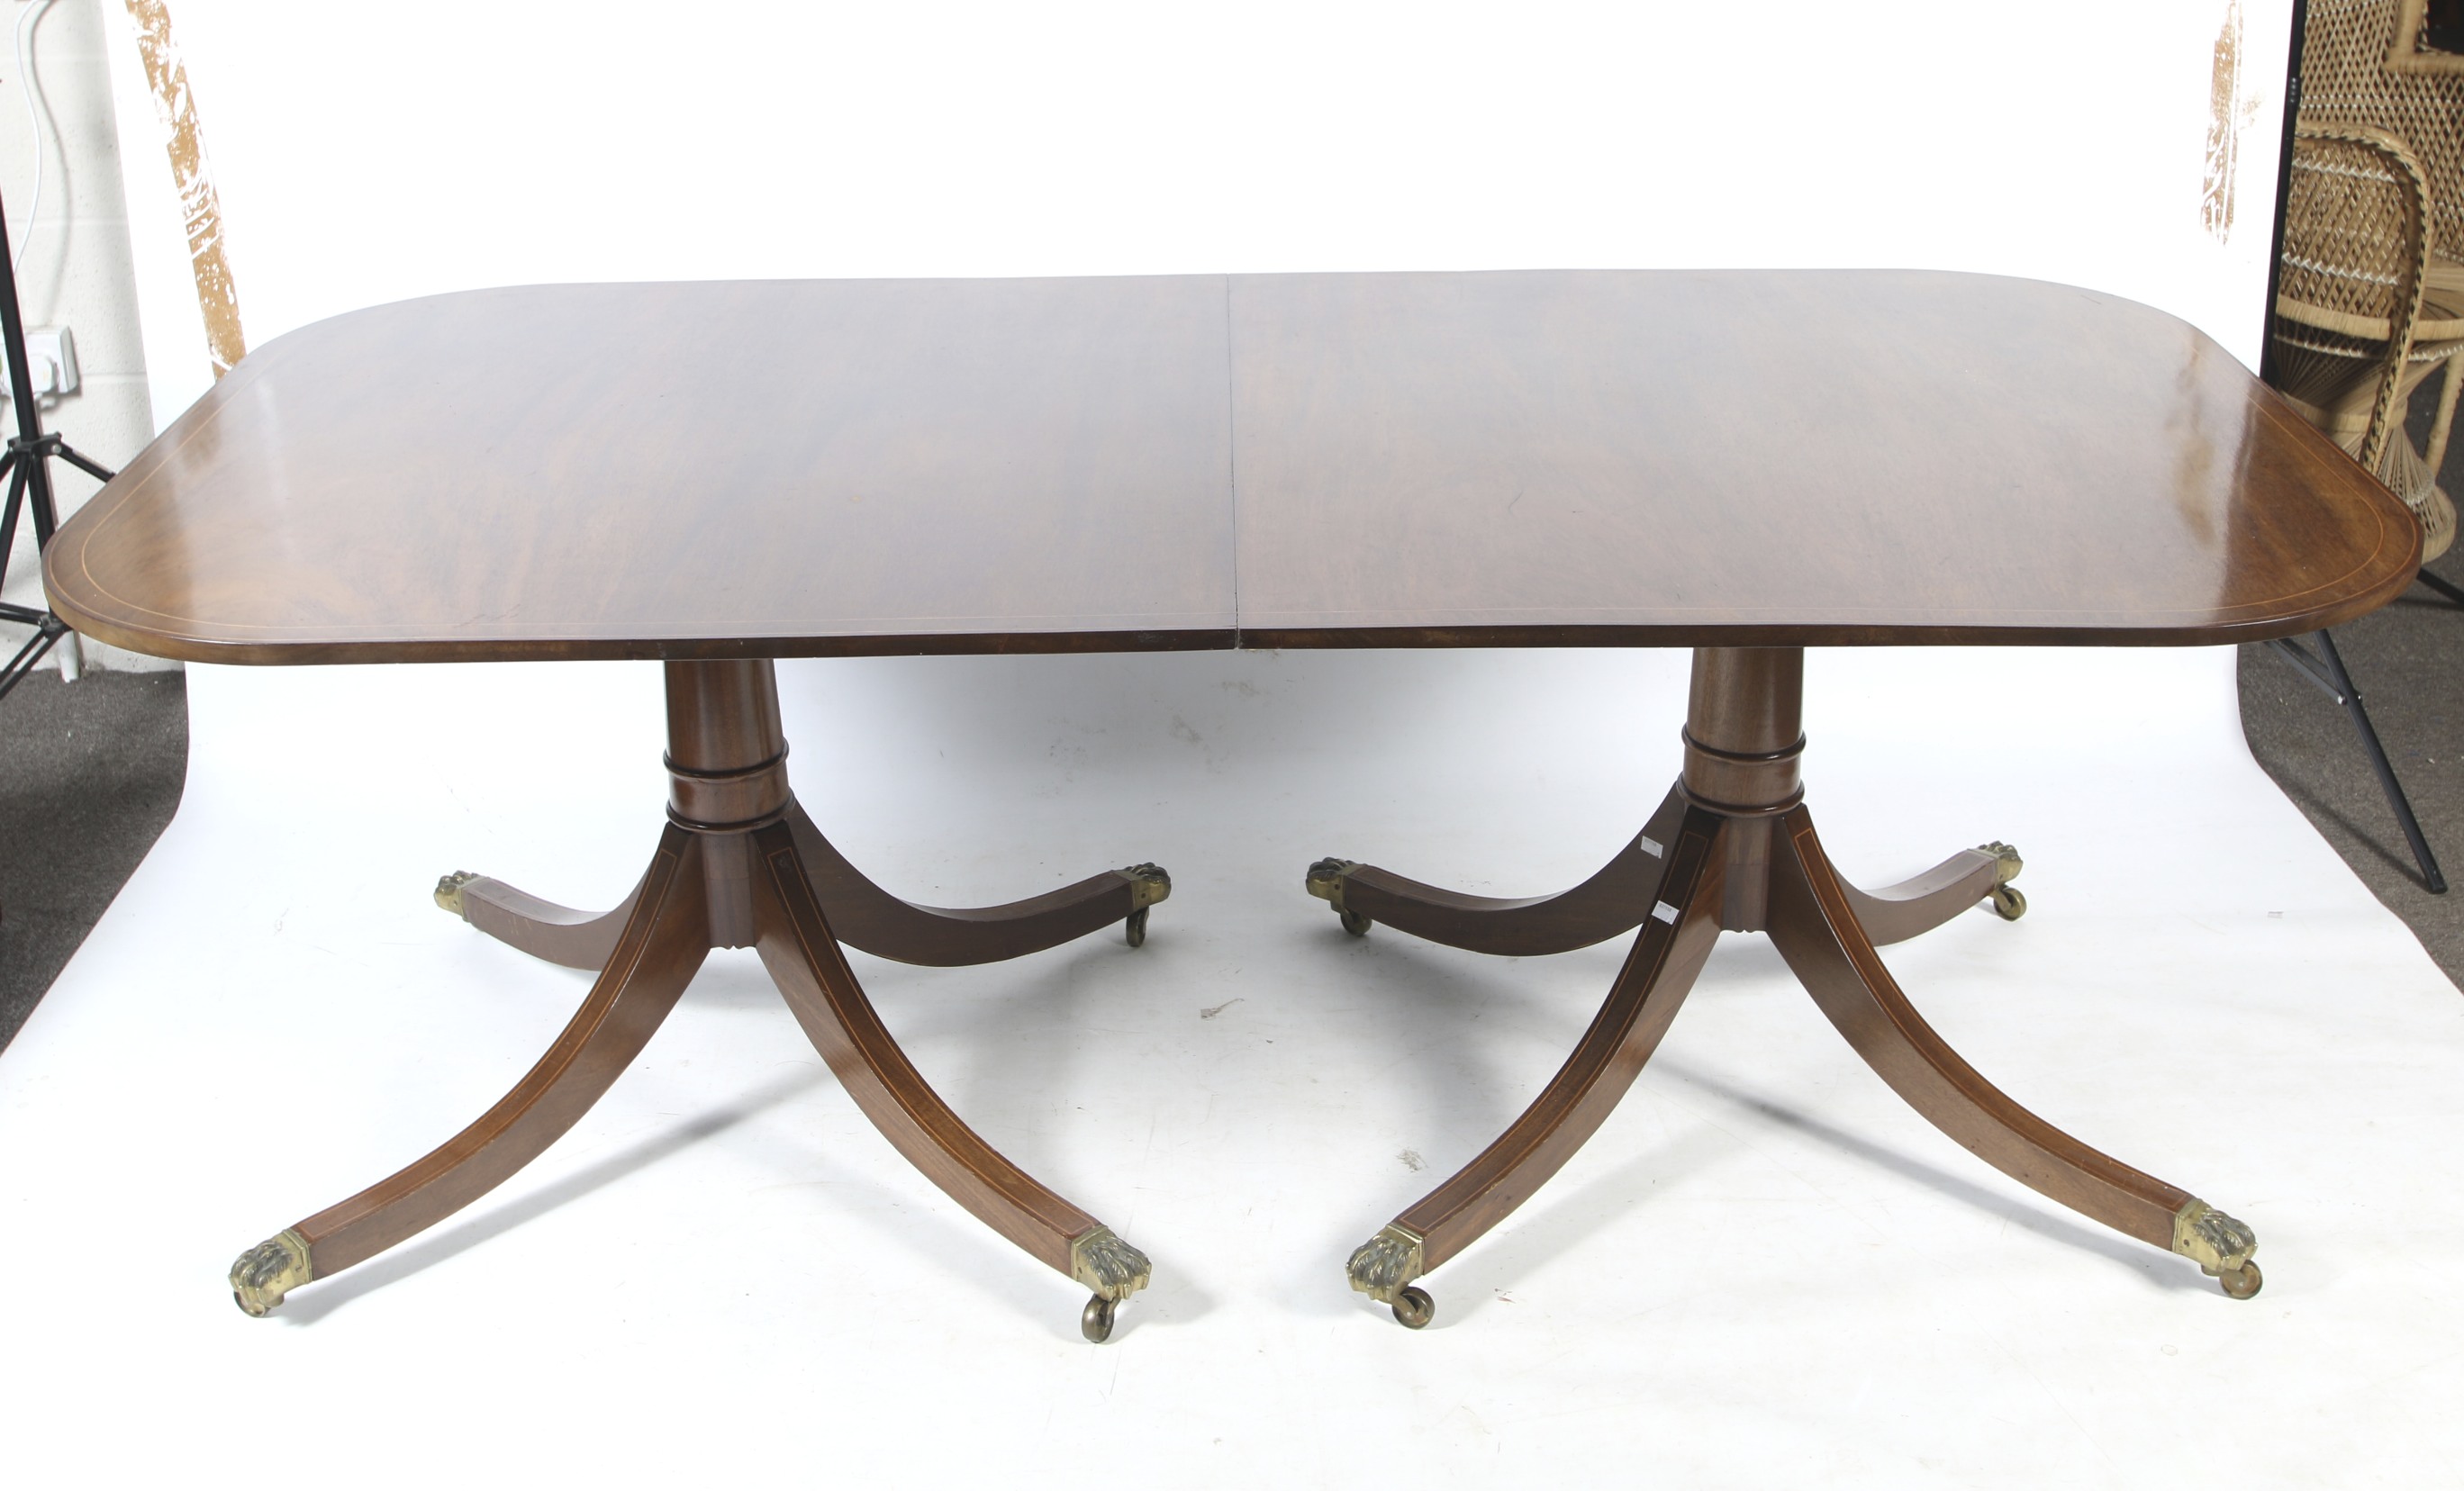 A Regency style twin pedestal dining table.